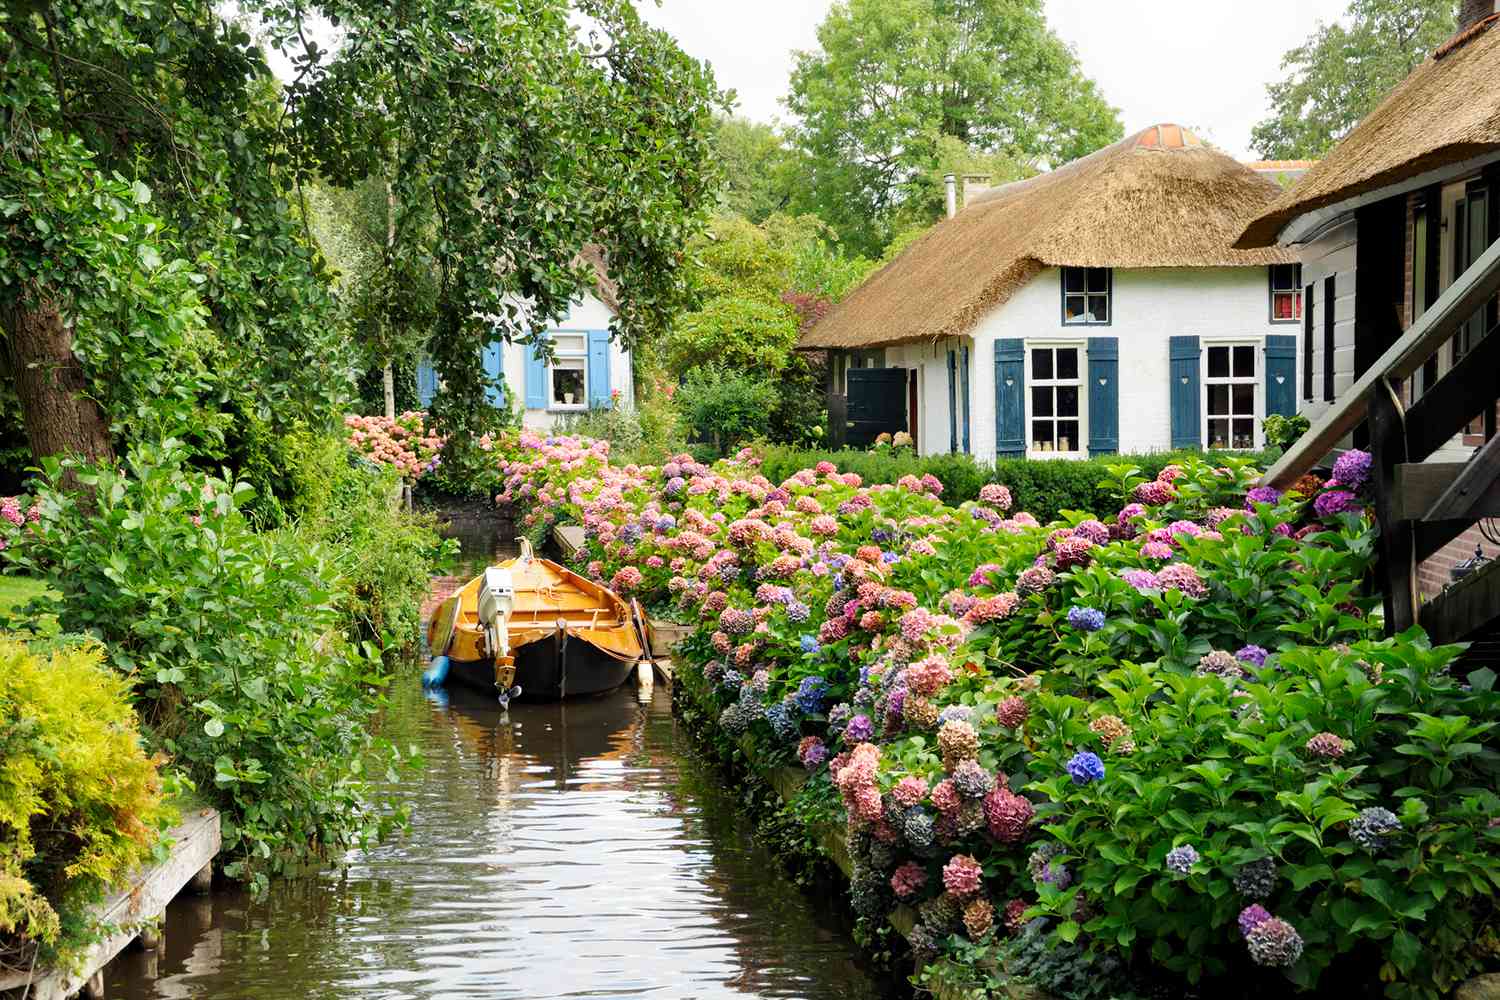 Giethoorn: Το χωριό της Ολλανδίας χωρίς δρόμους και αυτοκίνητα που αποκαλούν "Βενετία του Βορρά"